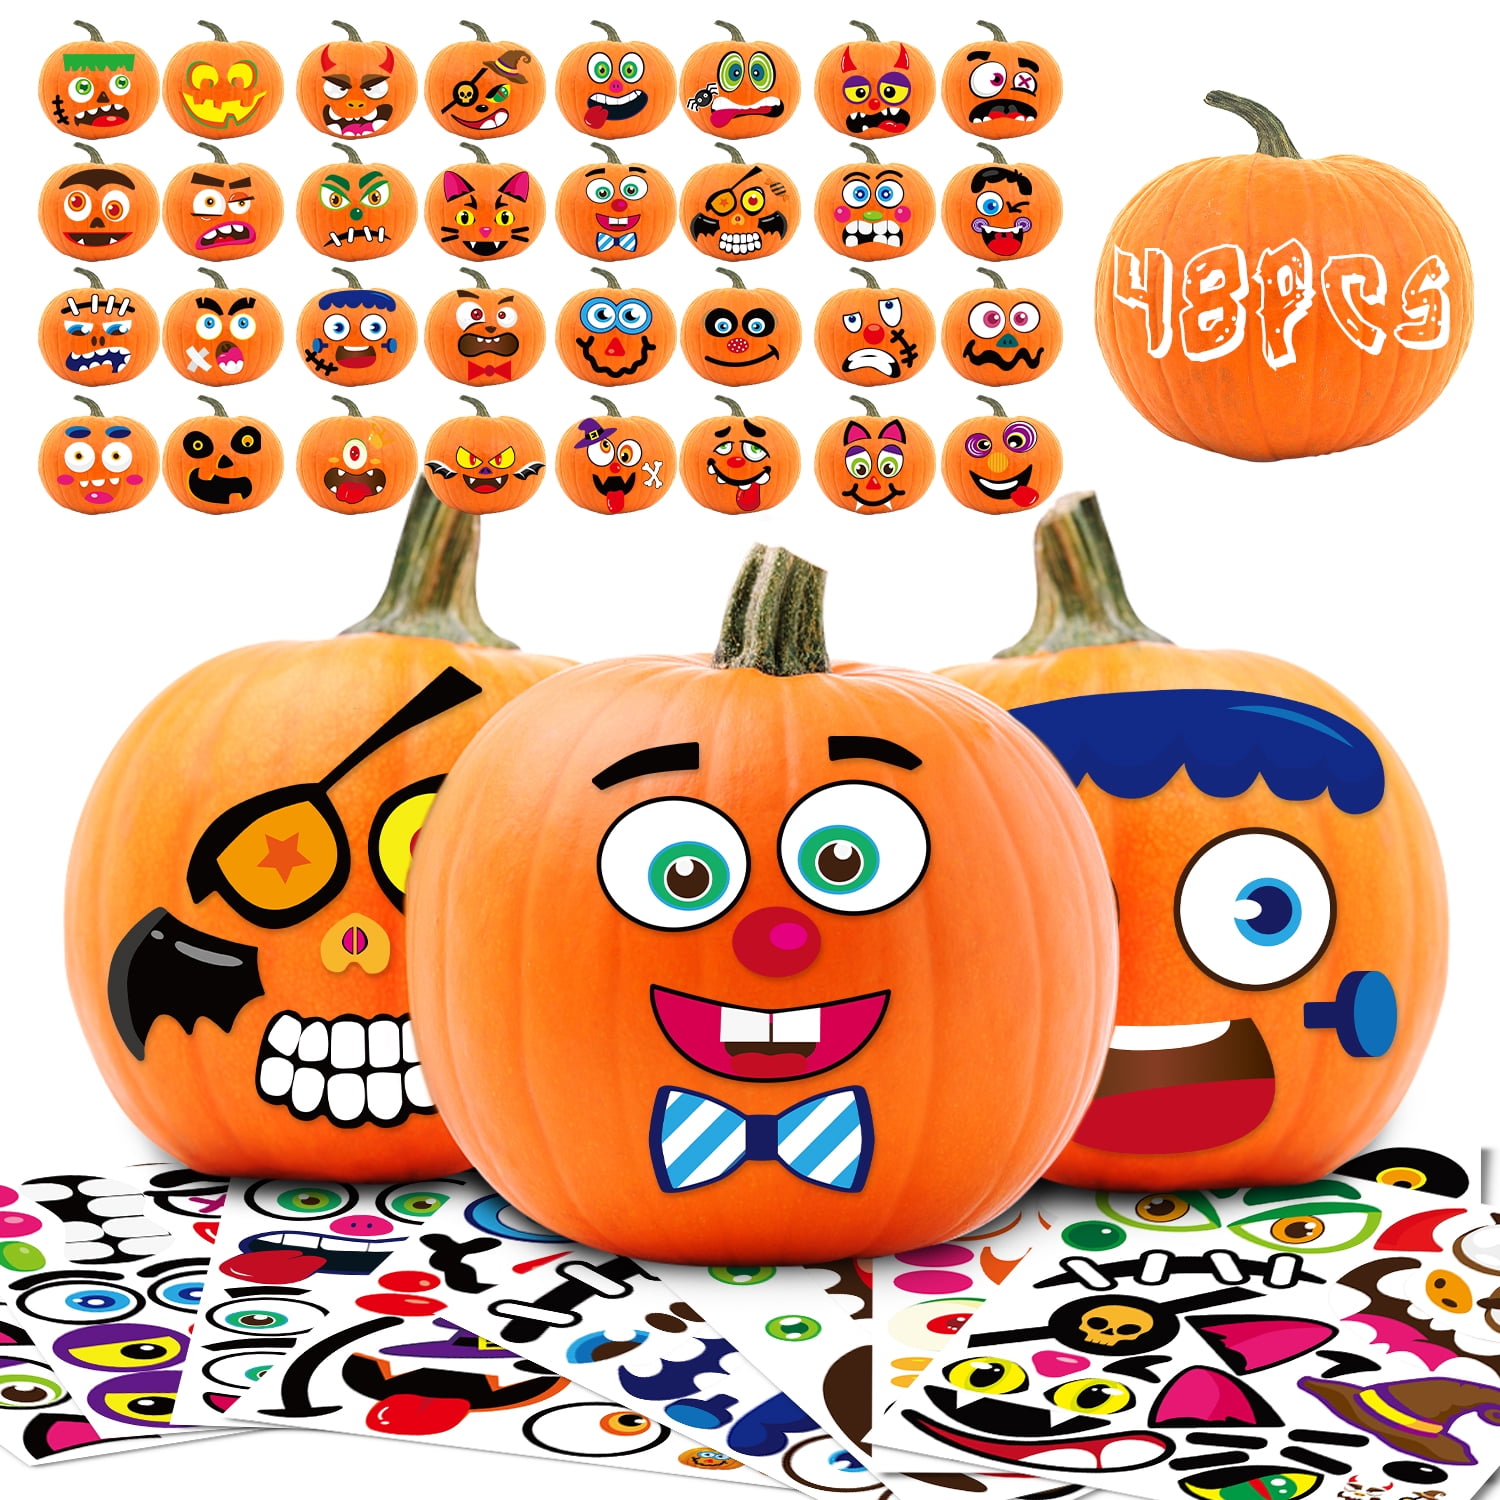 12 Designs XJF Halloween Pumpkin Decorating Kit Stickers - Halloween Party Supplies Trick or Treat Party Favors Foam Pumpkin Decorating Stickers,Makes 24 Pumpkins 